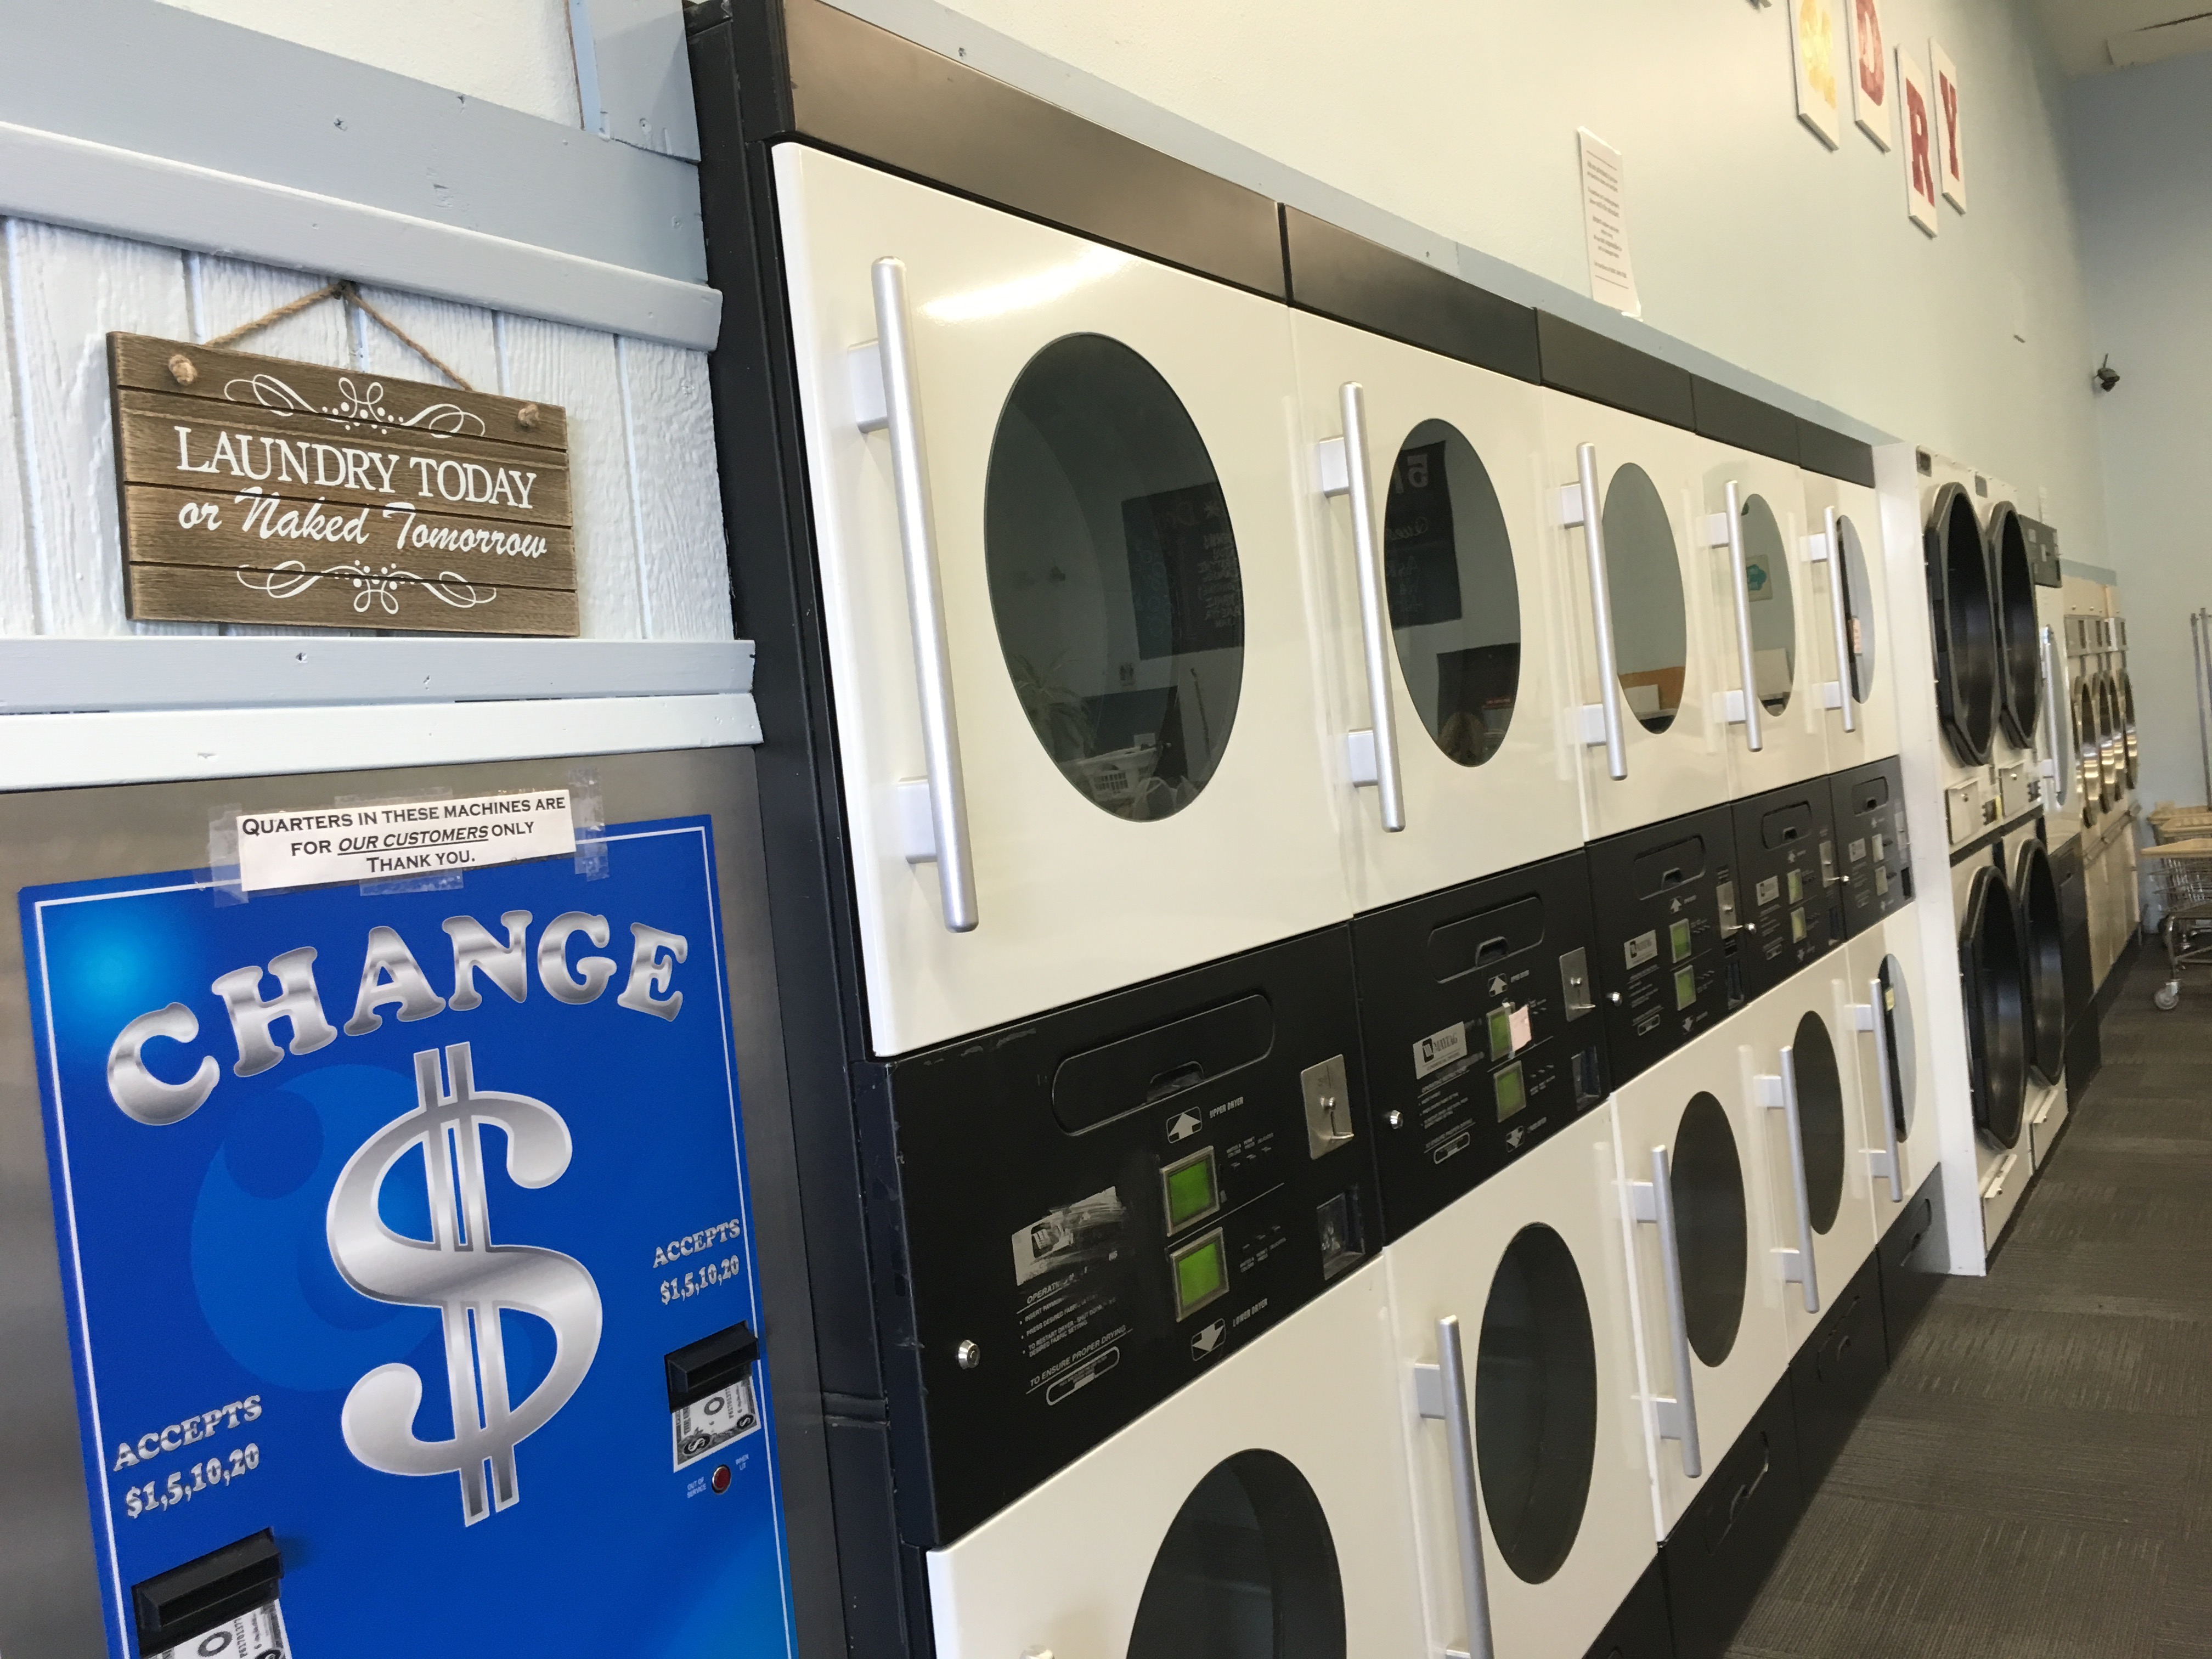 Thompson Laundry Company - 5 Mile Wash & Dry | 1920 W Francis Ave, Spokane, WA, 99205 | +1 (509) 326-4495